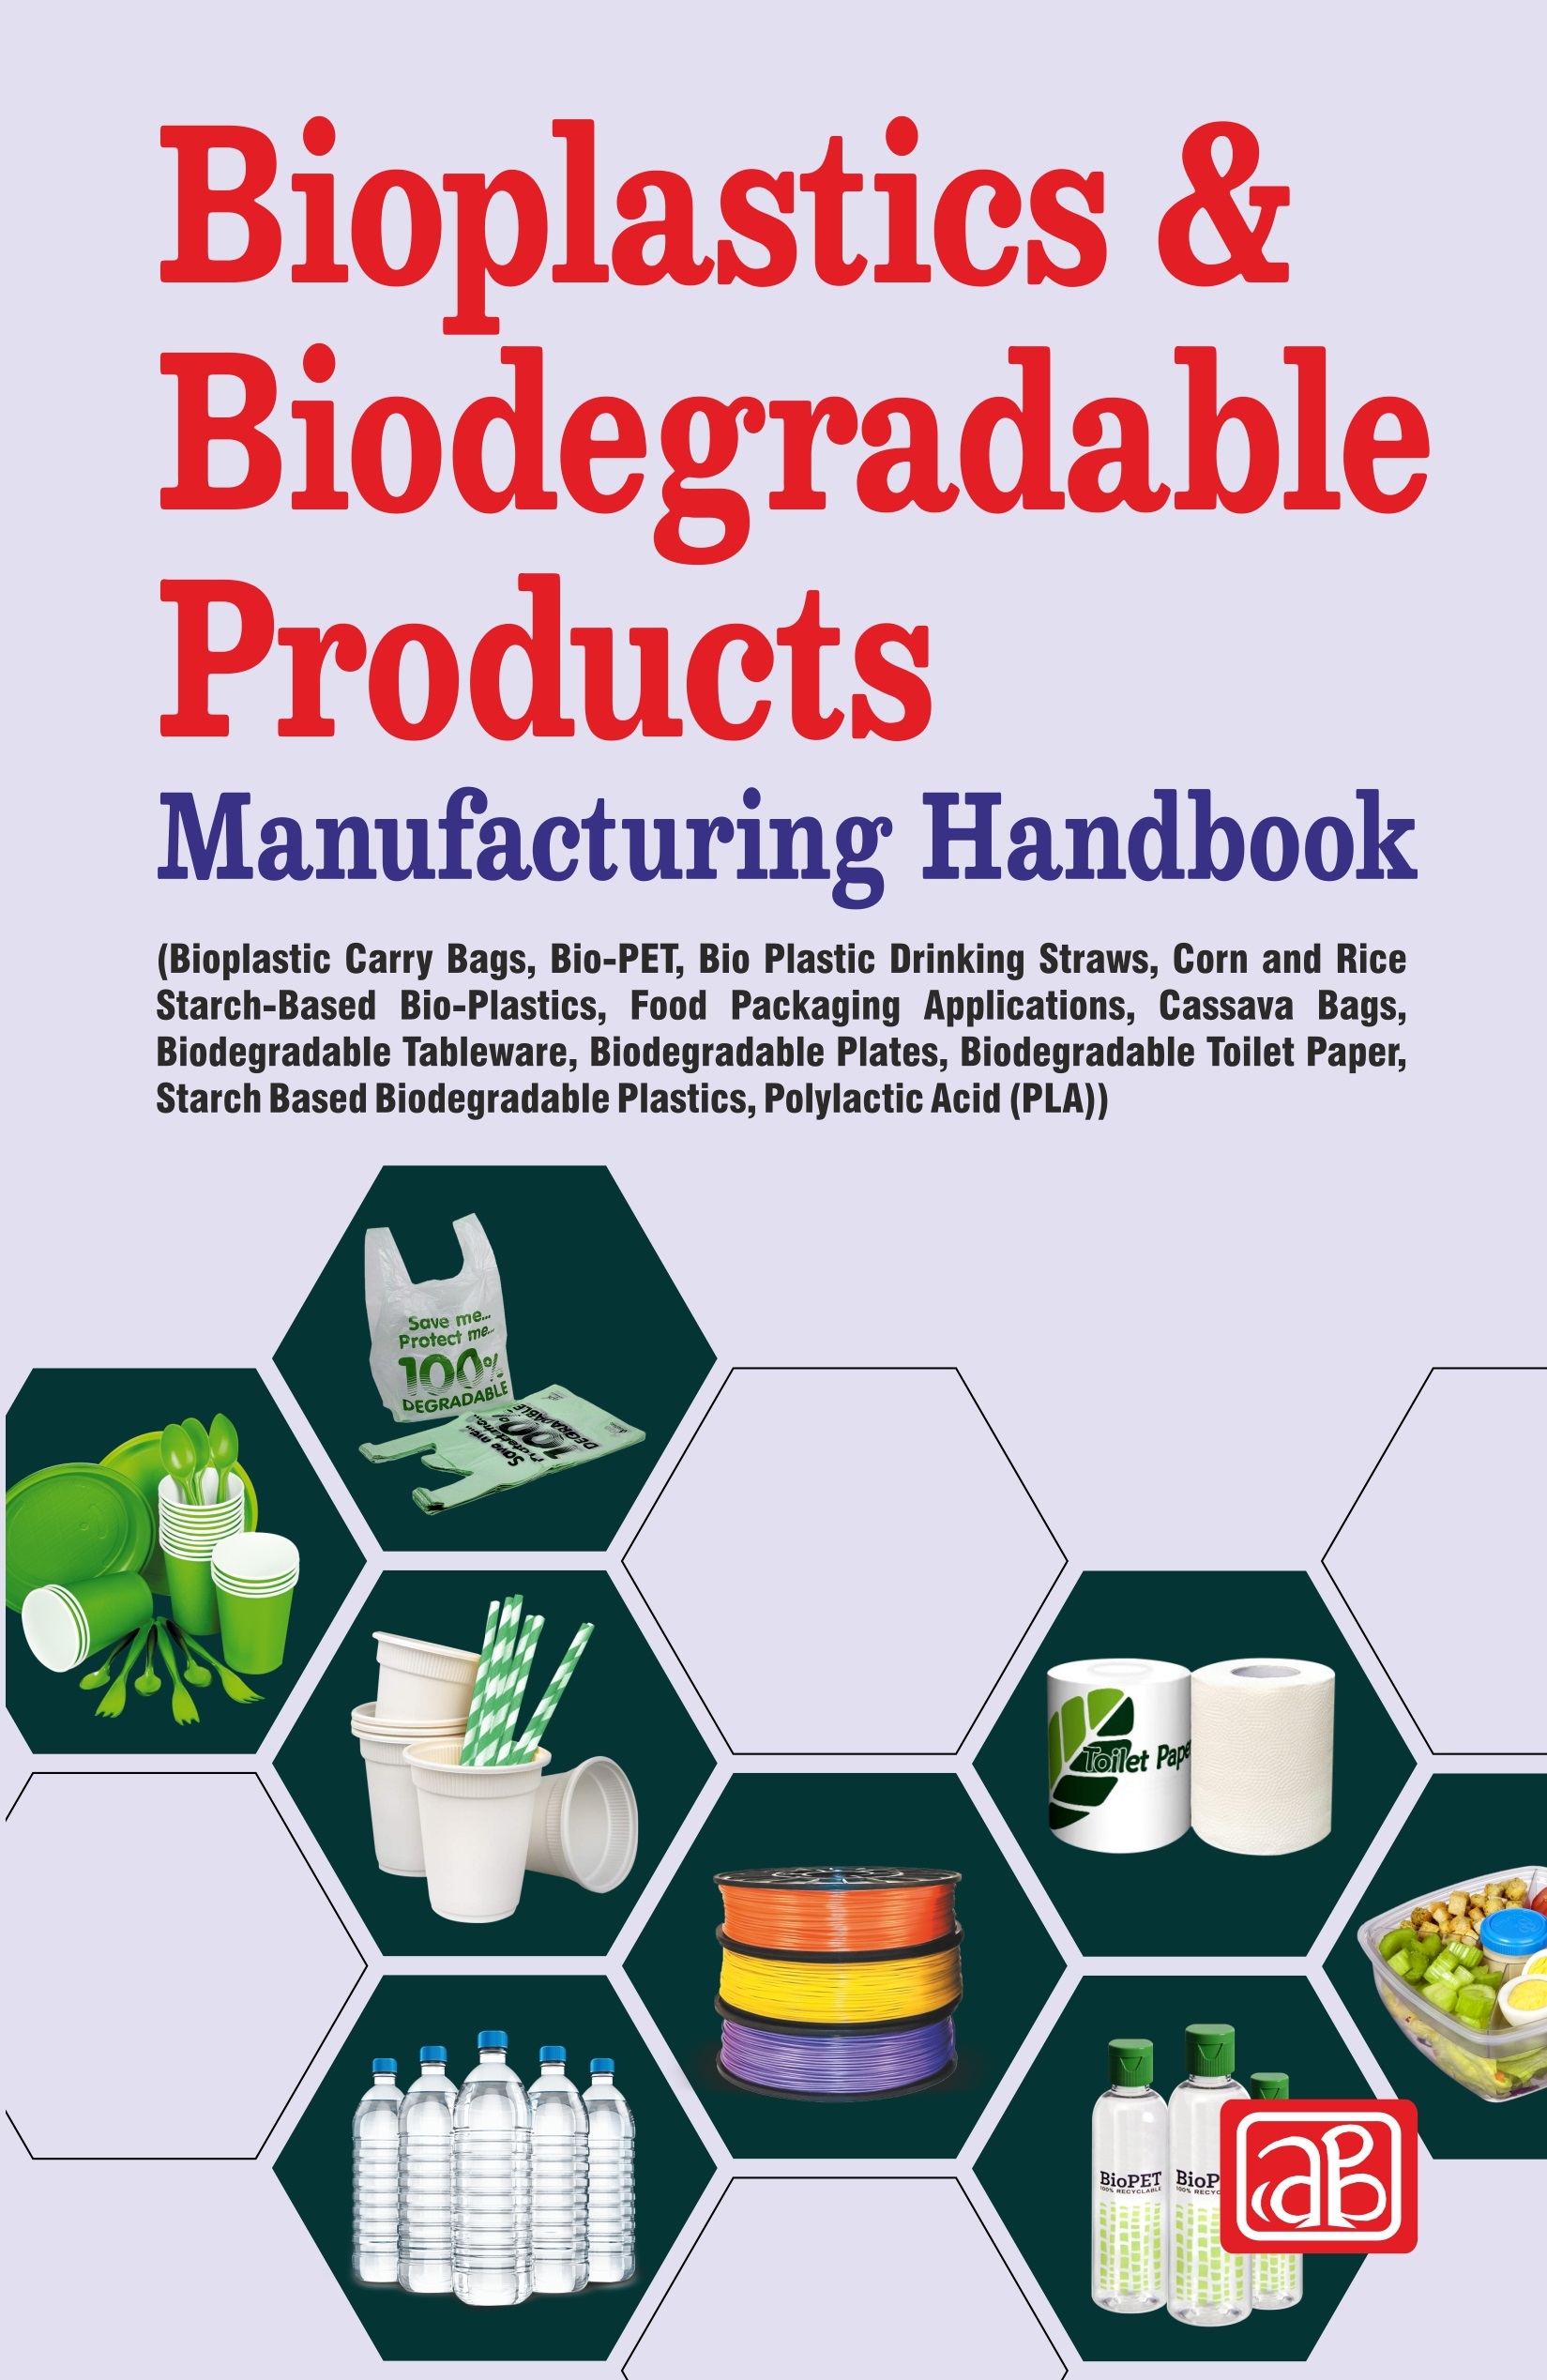 Bioplastics & Biodegradable Products Manufacturing Handbook (Bioplastic Carry Bags, Bio-PET, Bioplastic Drinking Straws, Corn and Rice Starch-Based Bioplastics, Food Packaging Applications, Cassava Bags, Biodegradable Tableware, Biodegradable Plates, Biodegradable Toilet Paper, Starch Based Biodegradable Plastics, Polylactic Acid (PLA))